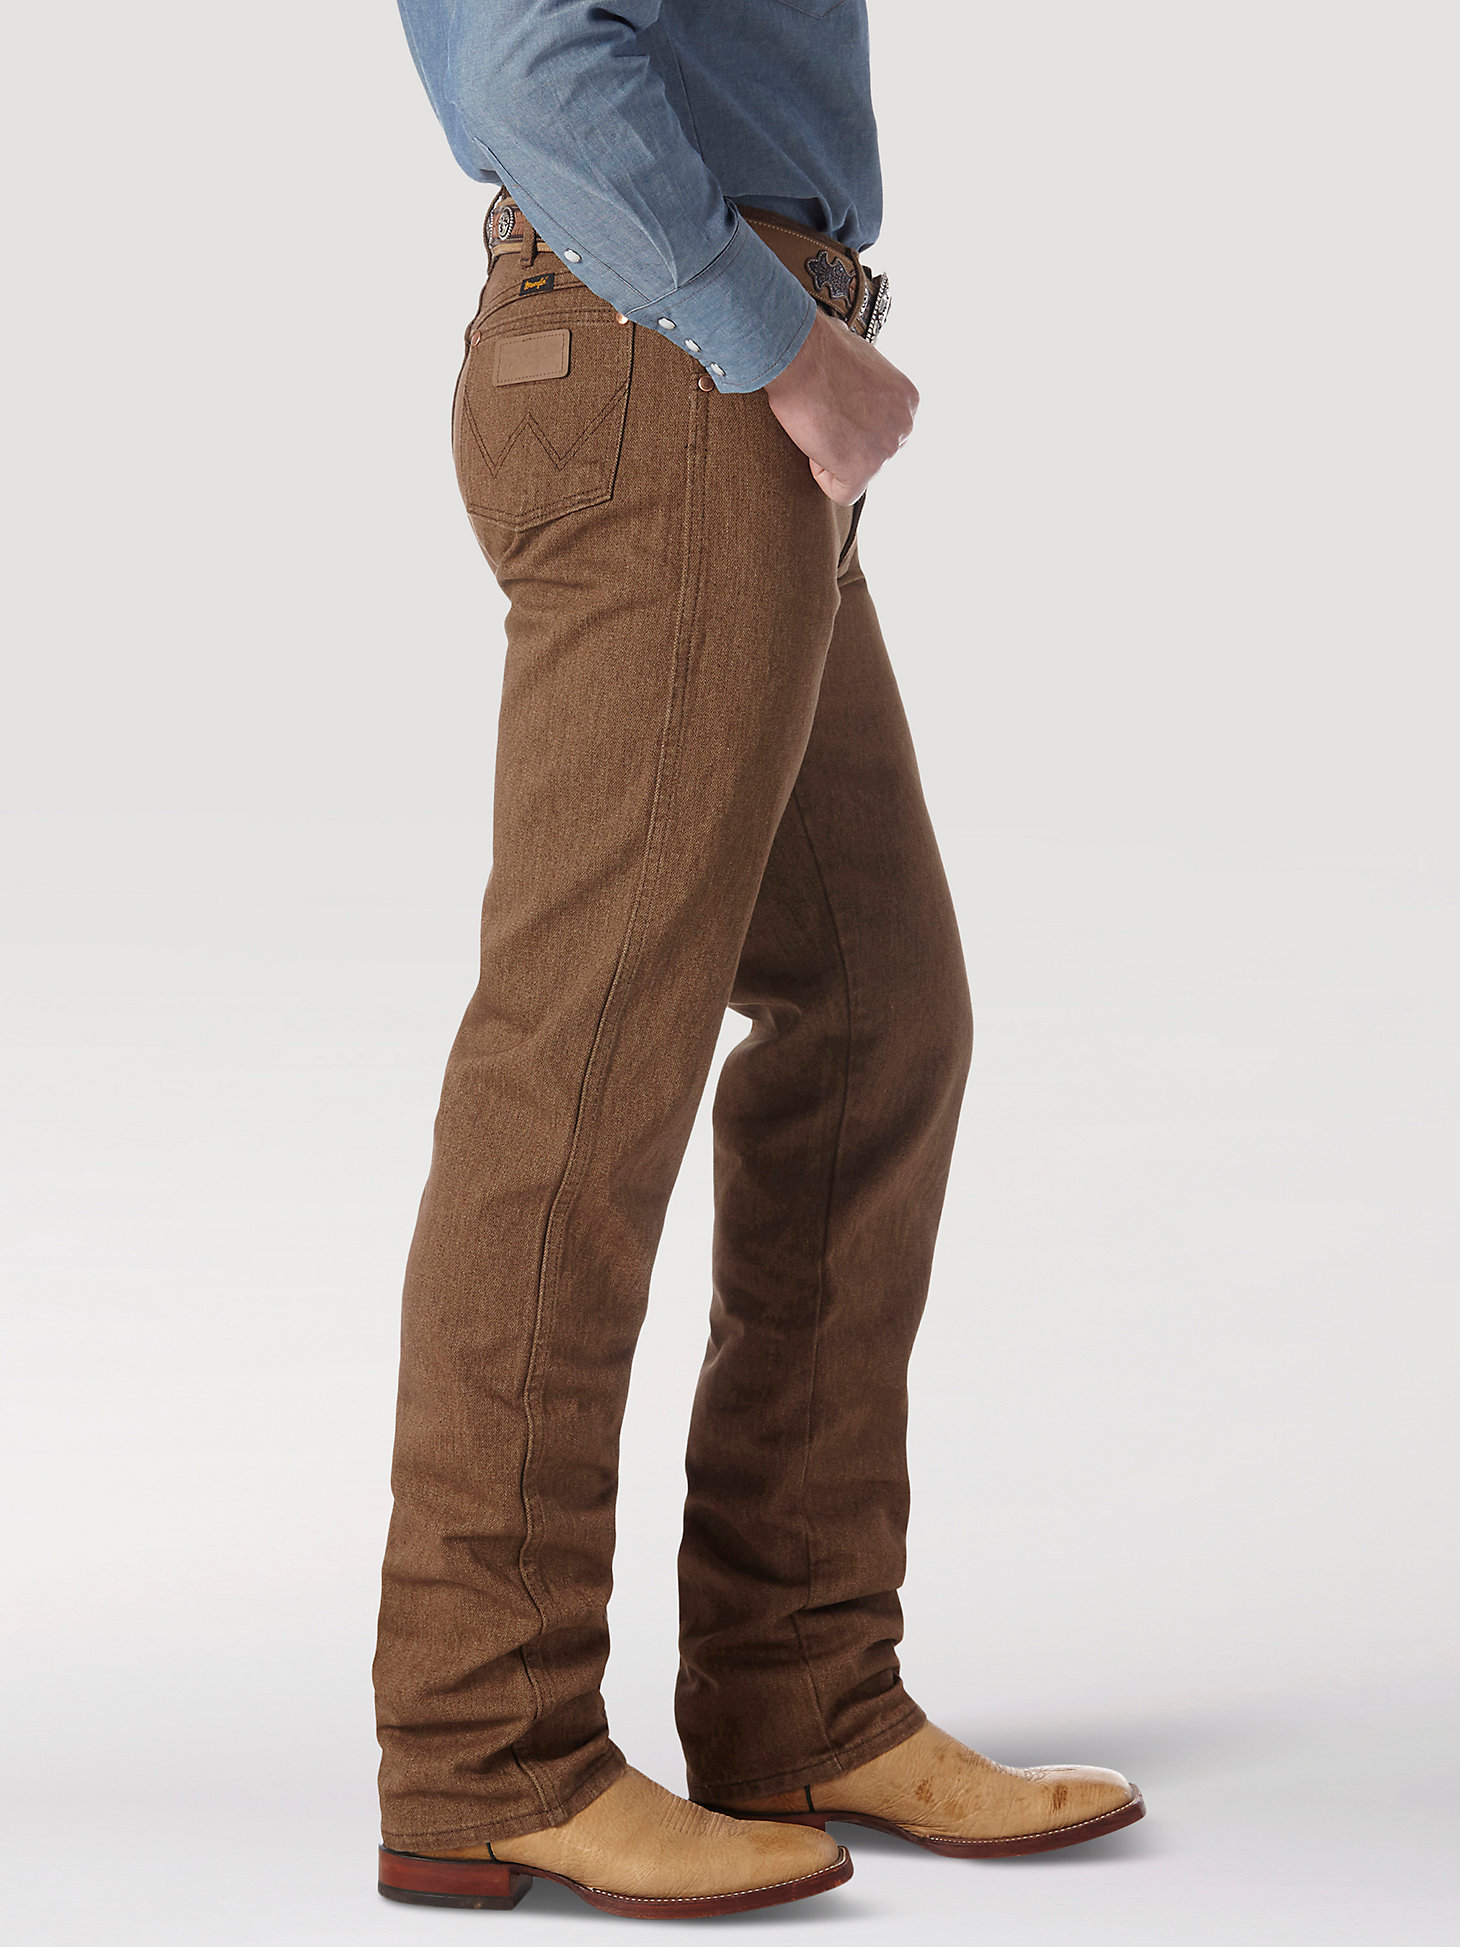 Wrangler® Cowboy Cut® Original Fit Jean | Men's JEANS | Wrangler®